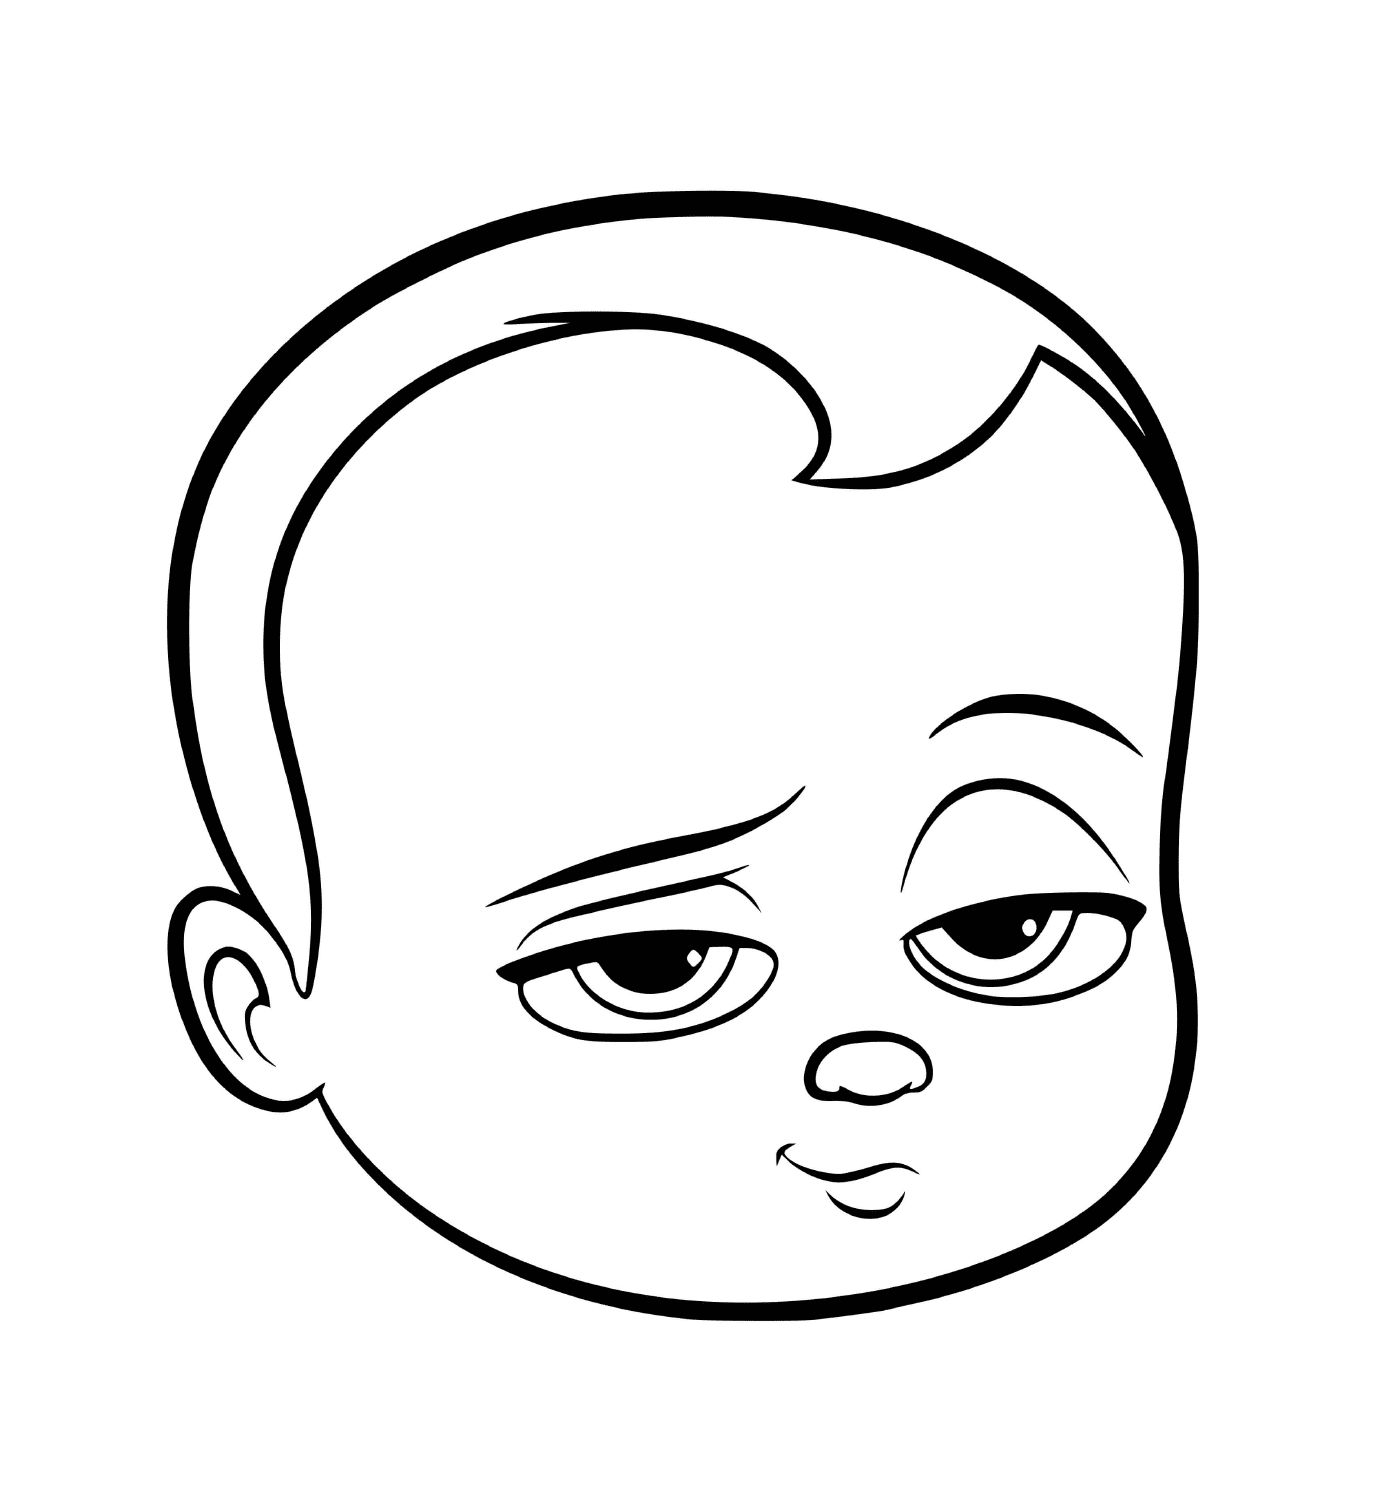  La cara de un bebé 